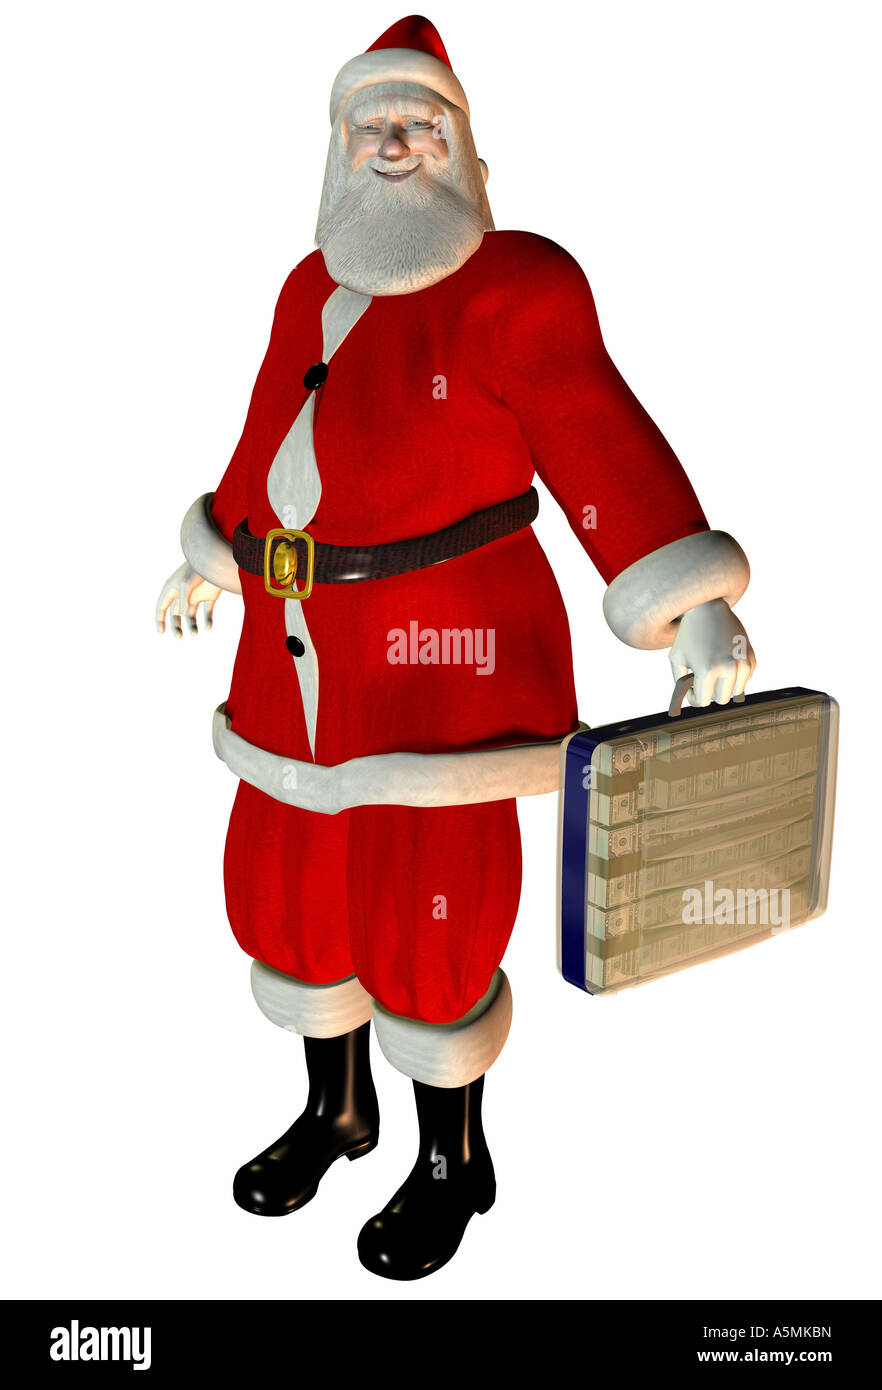 Weihnachtsgeschäft christmas business Stock Photo